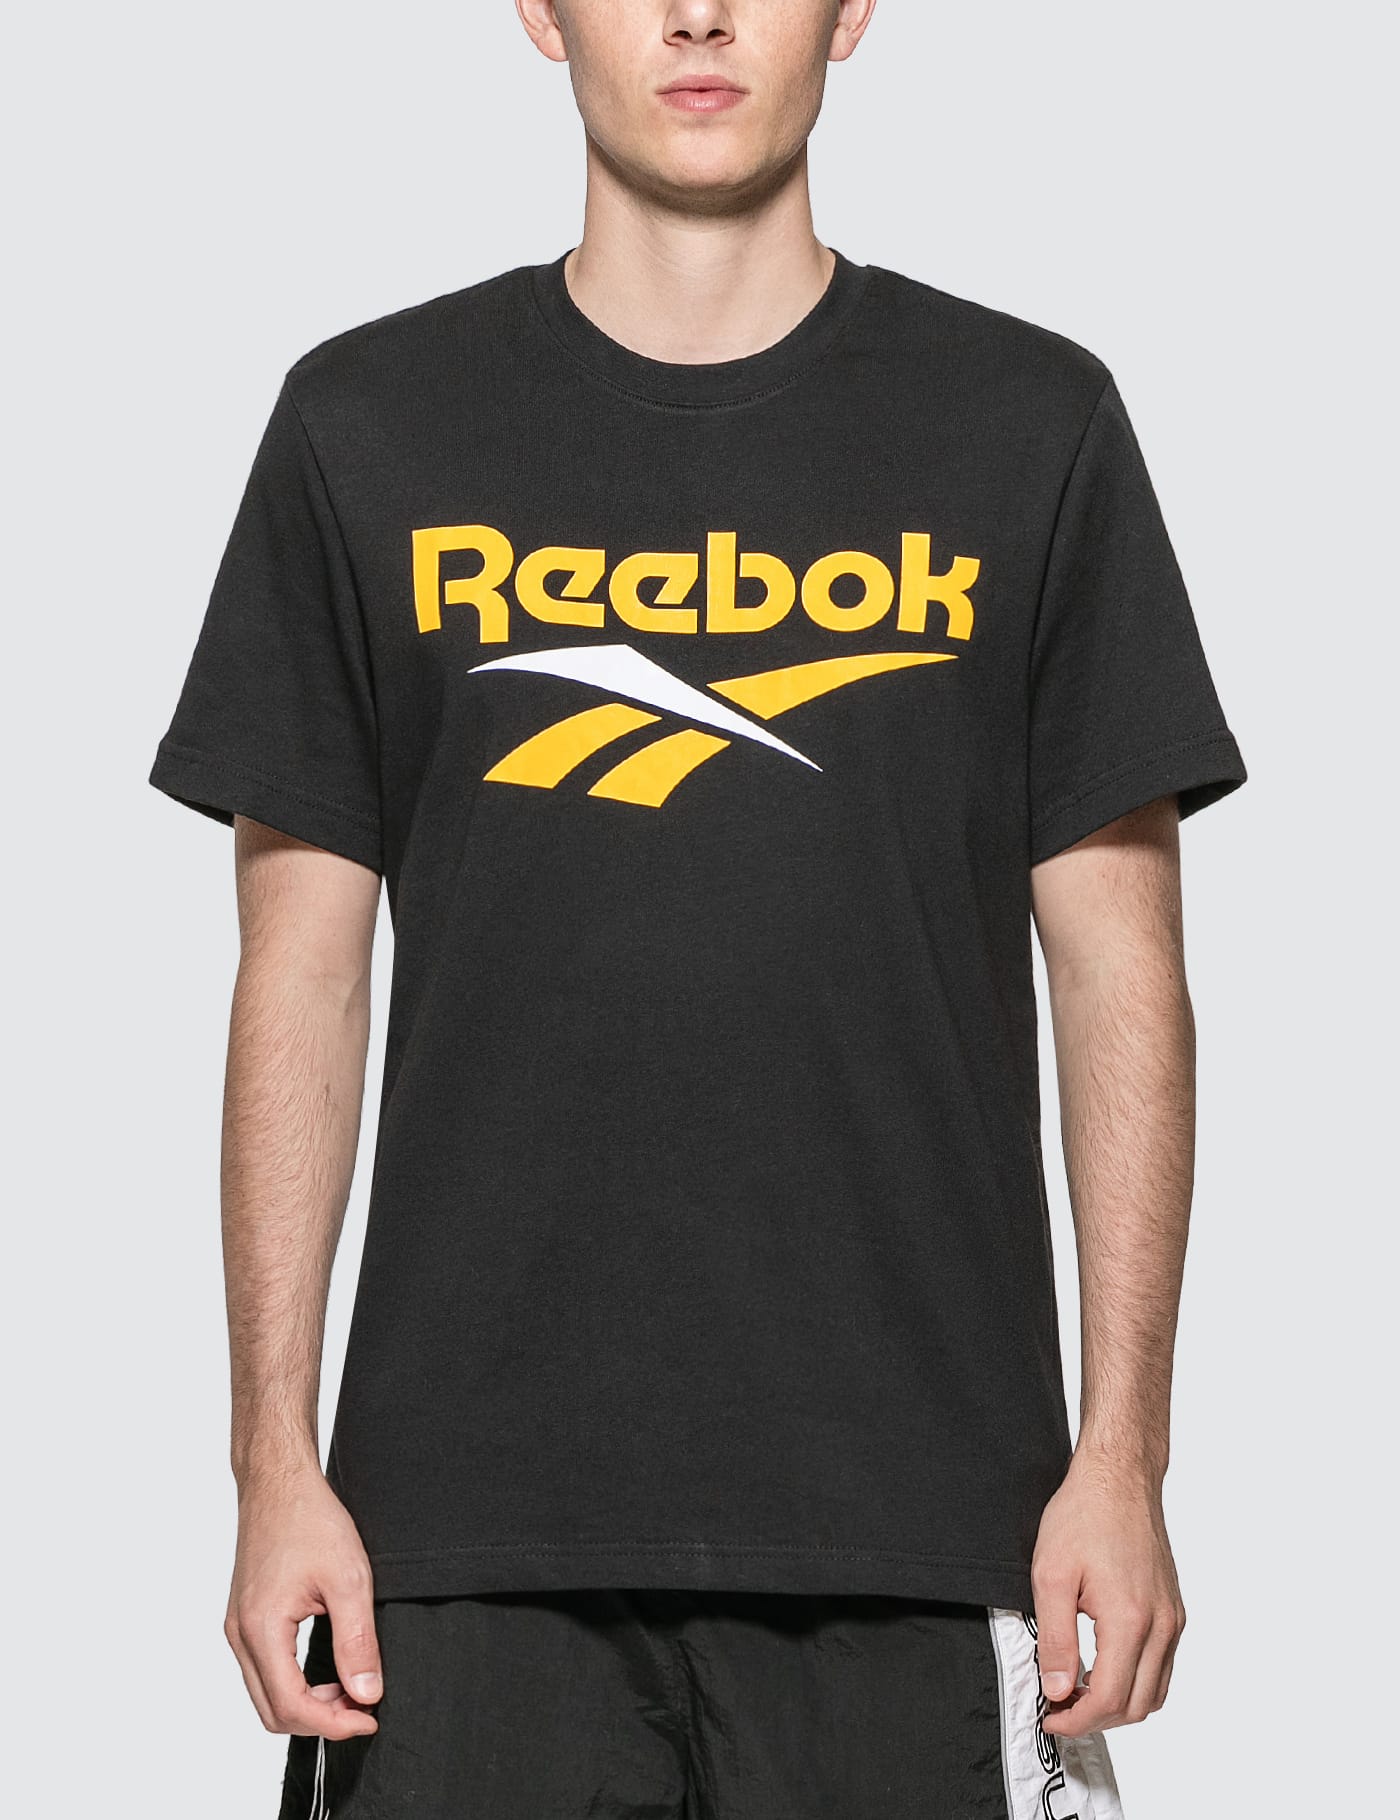 Buy reebok vector t shirt - OFF 77%